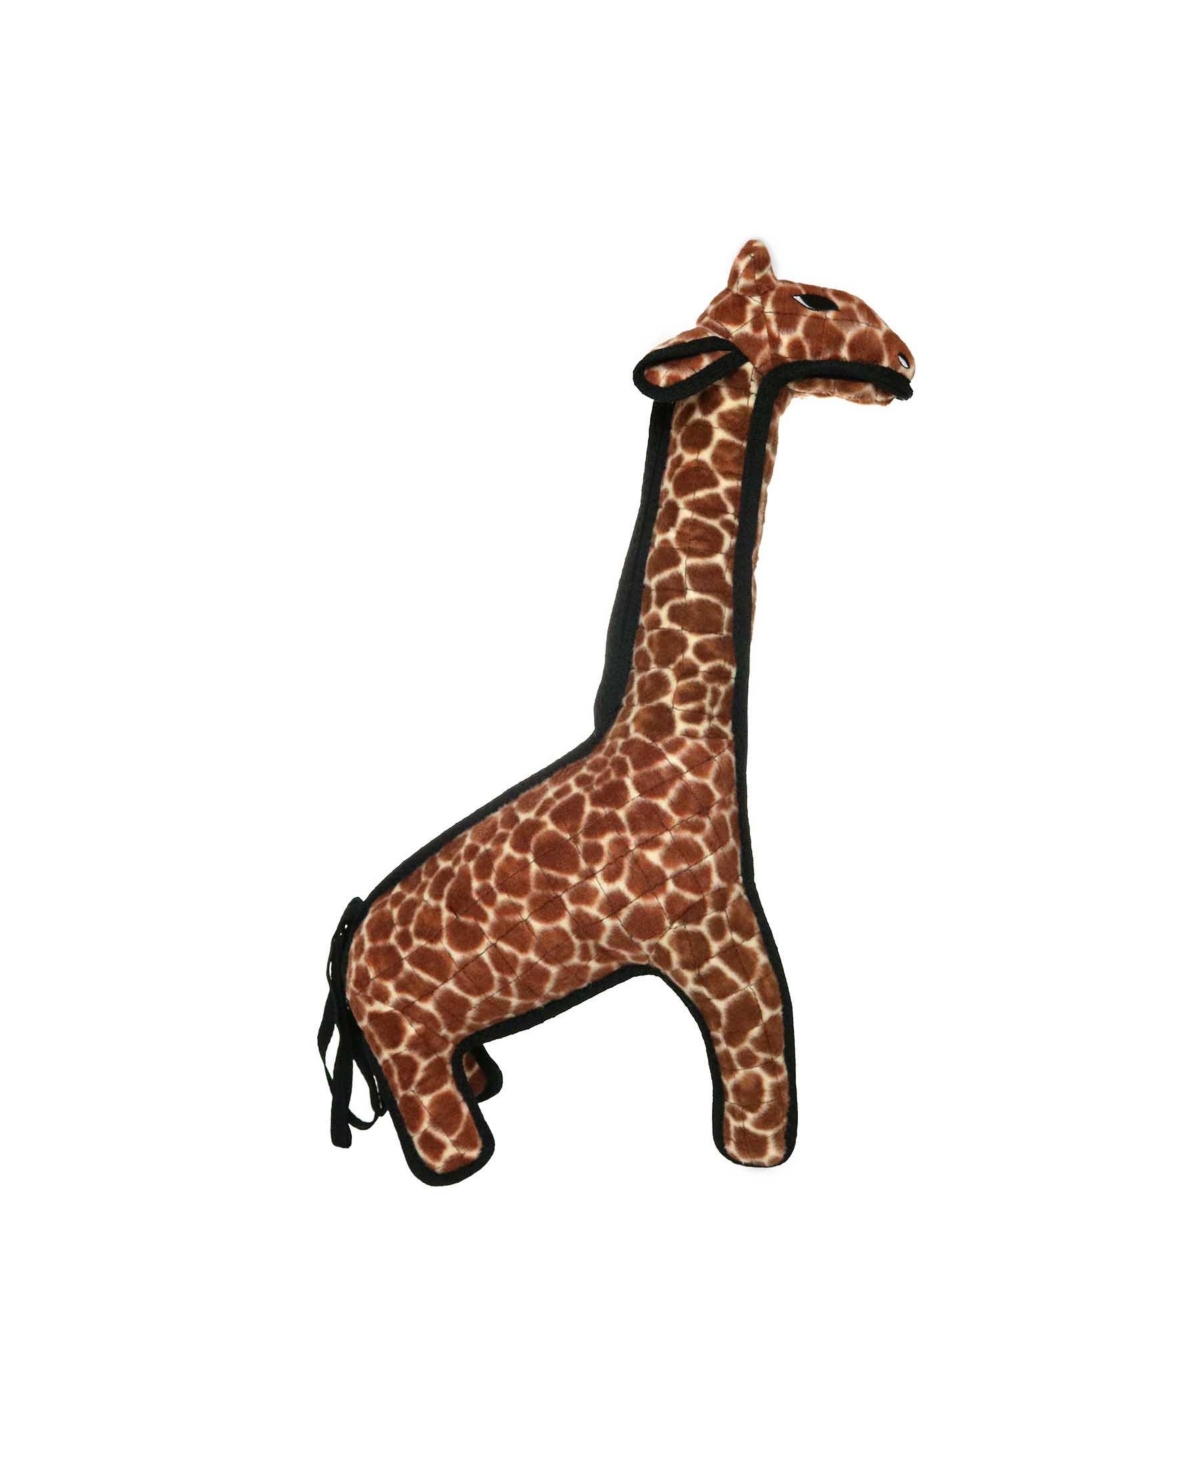 Zoo Giraffe, Dog Toy - Brown